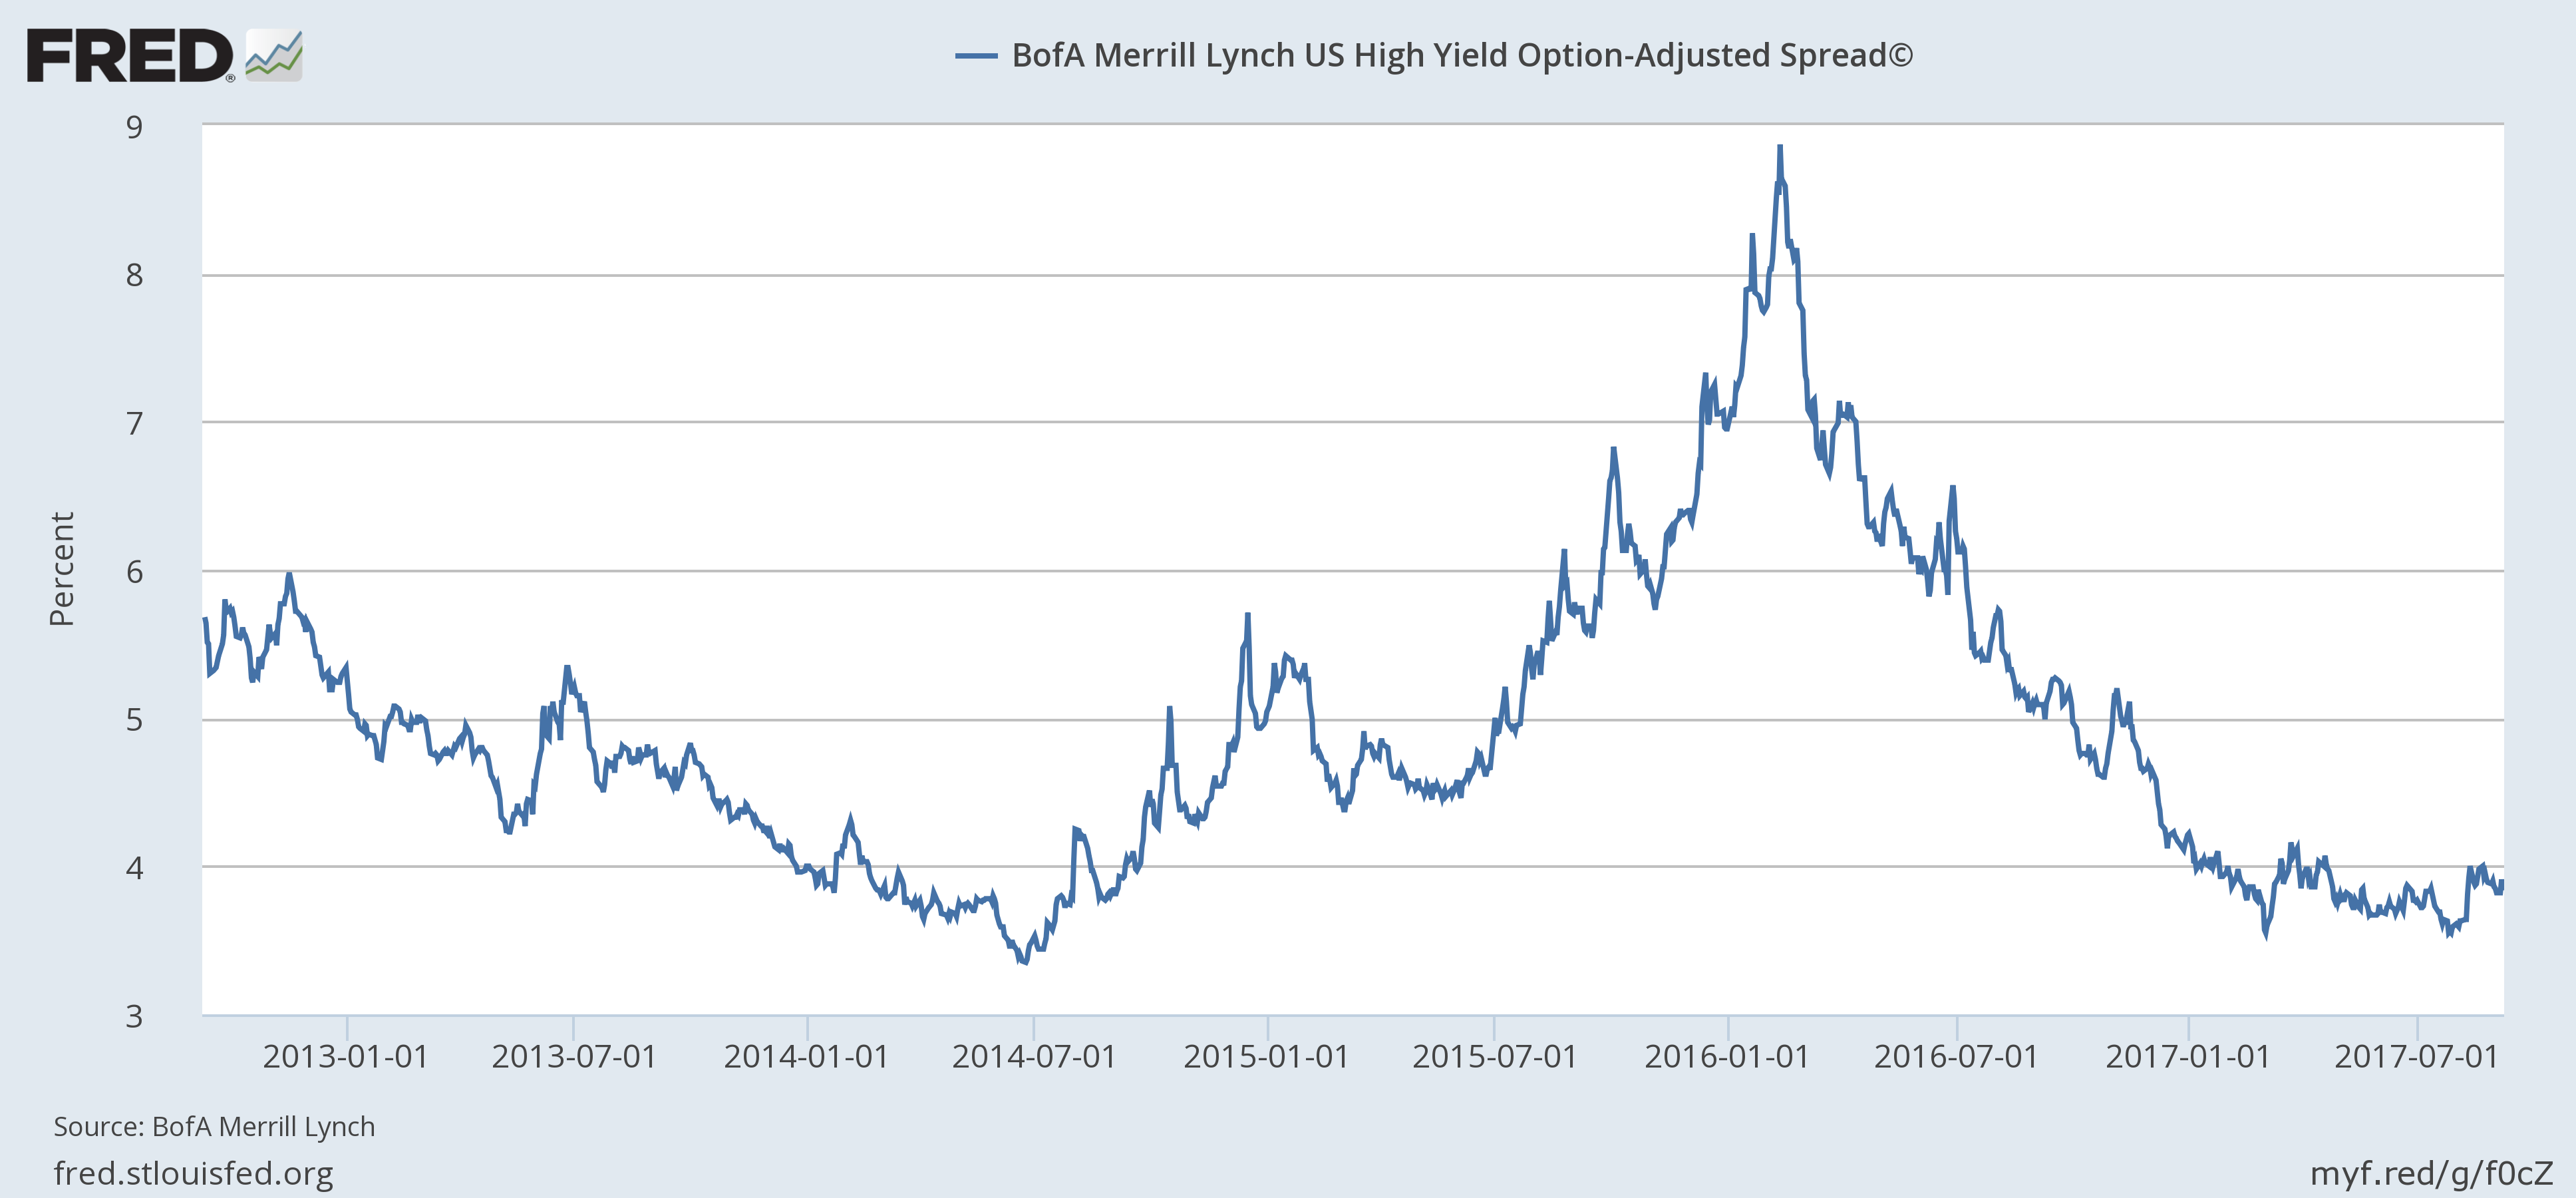 BofA Merrill Lynch US High Yield Option, Jan 2013 - 2017